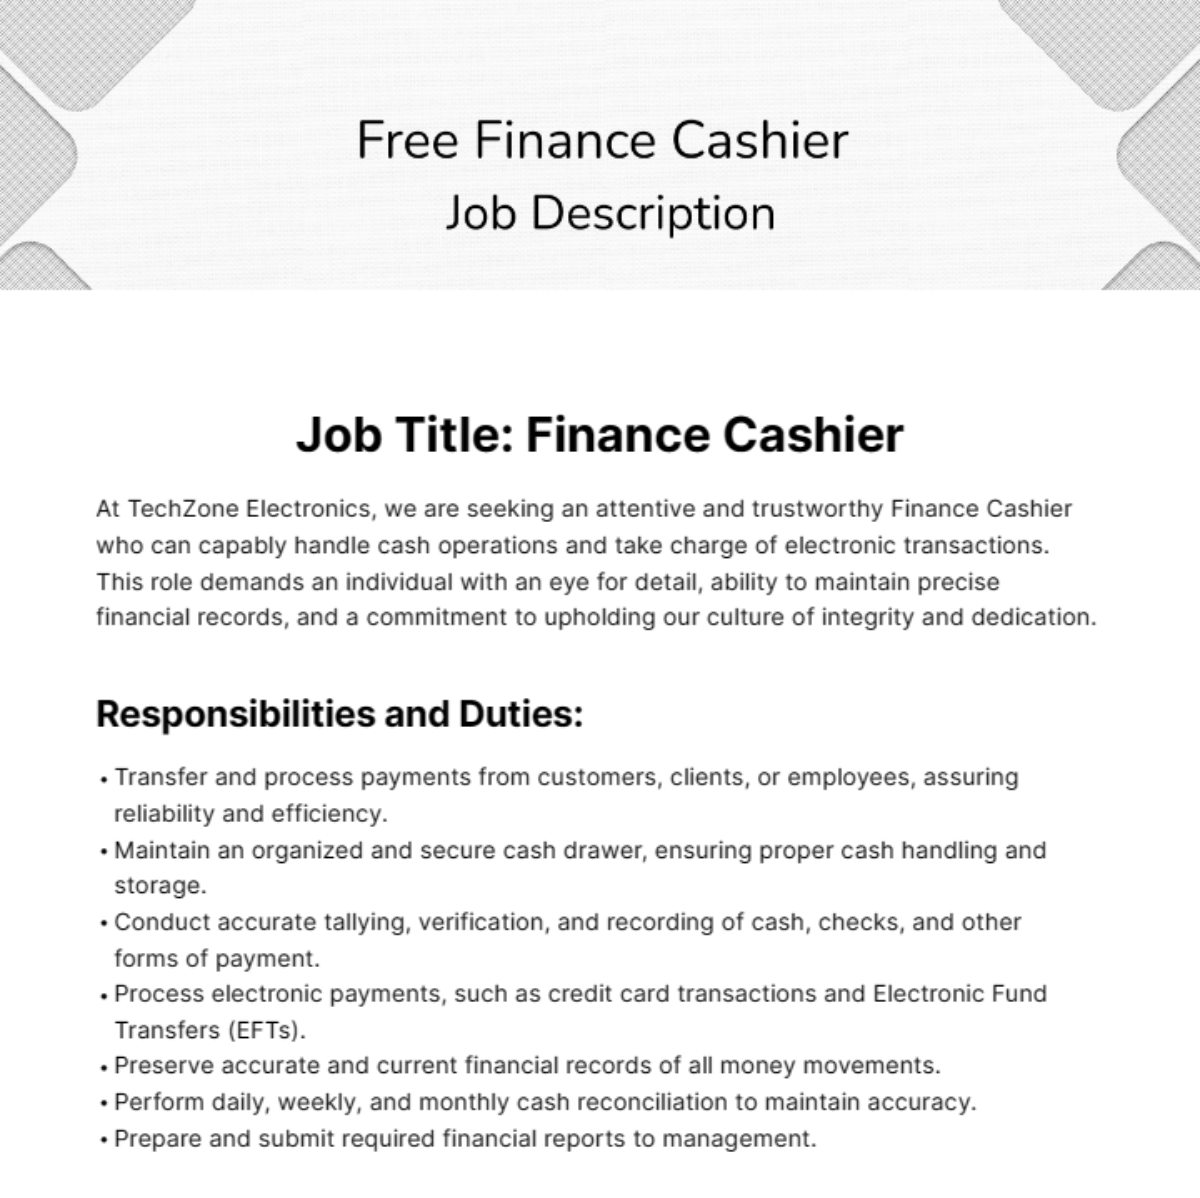 Free Finance Cashier Job Description Template